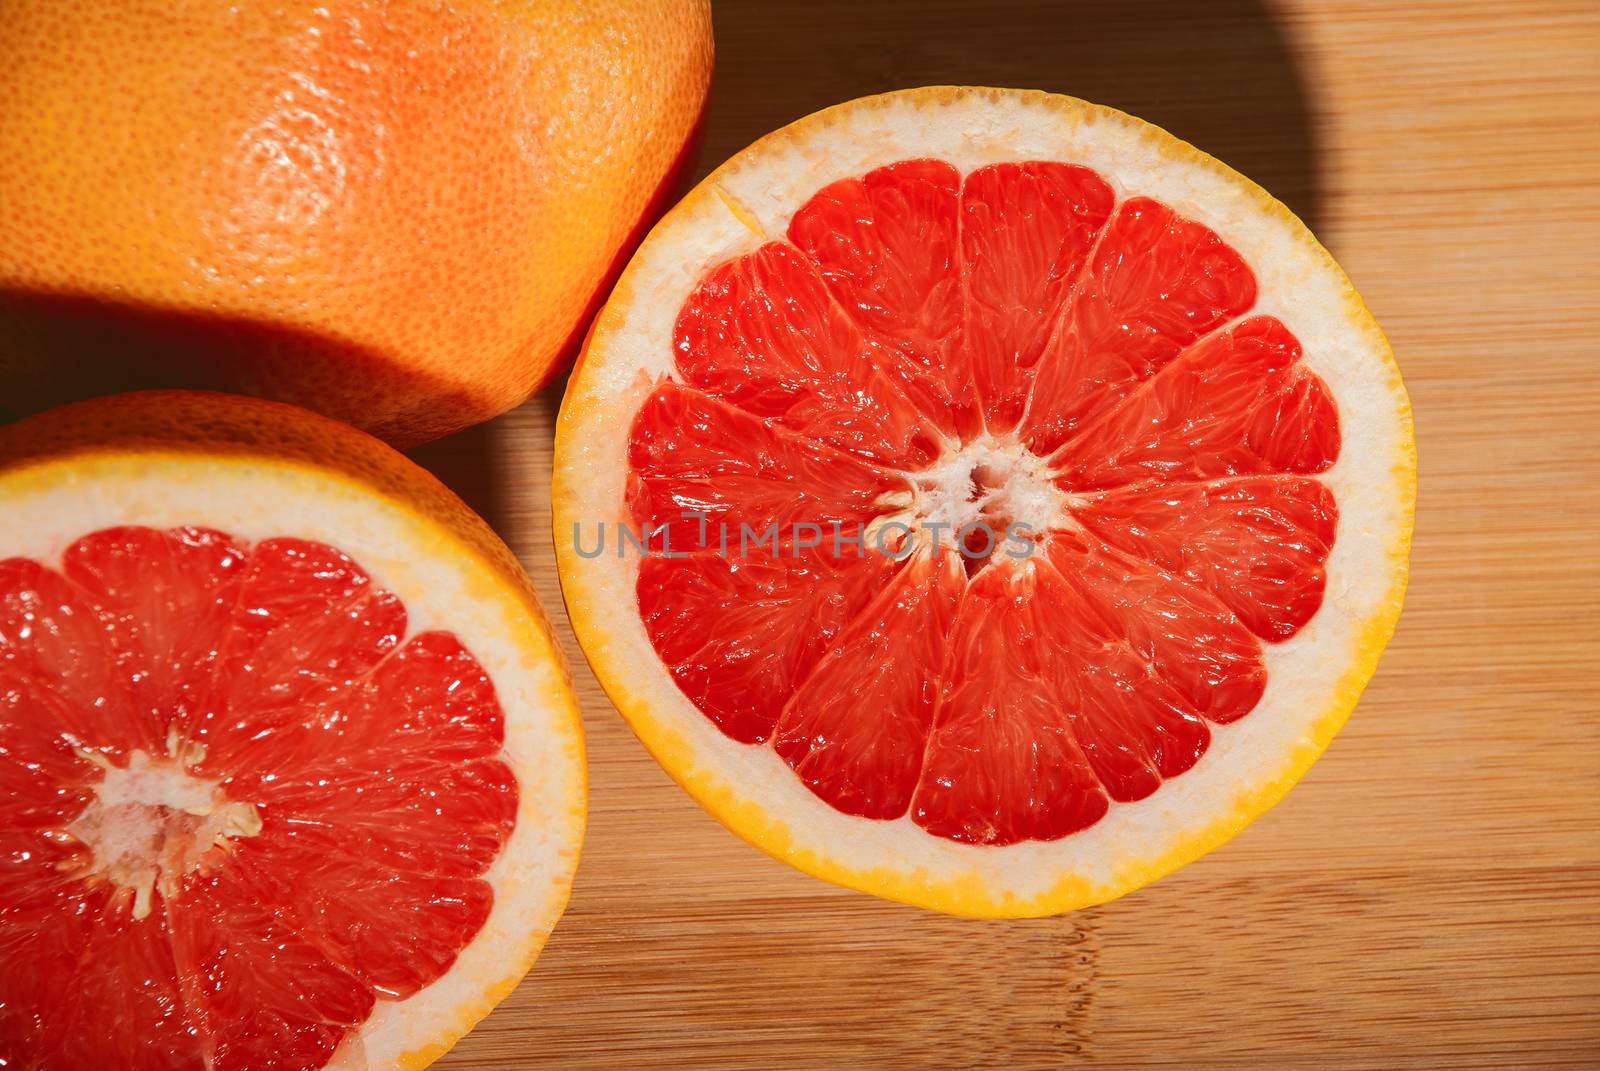 Slice red grapefruit by negativ